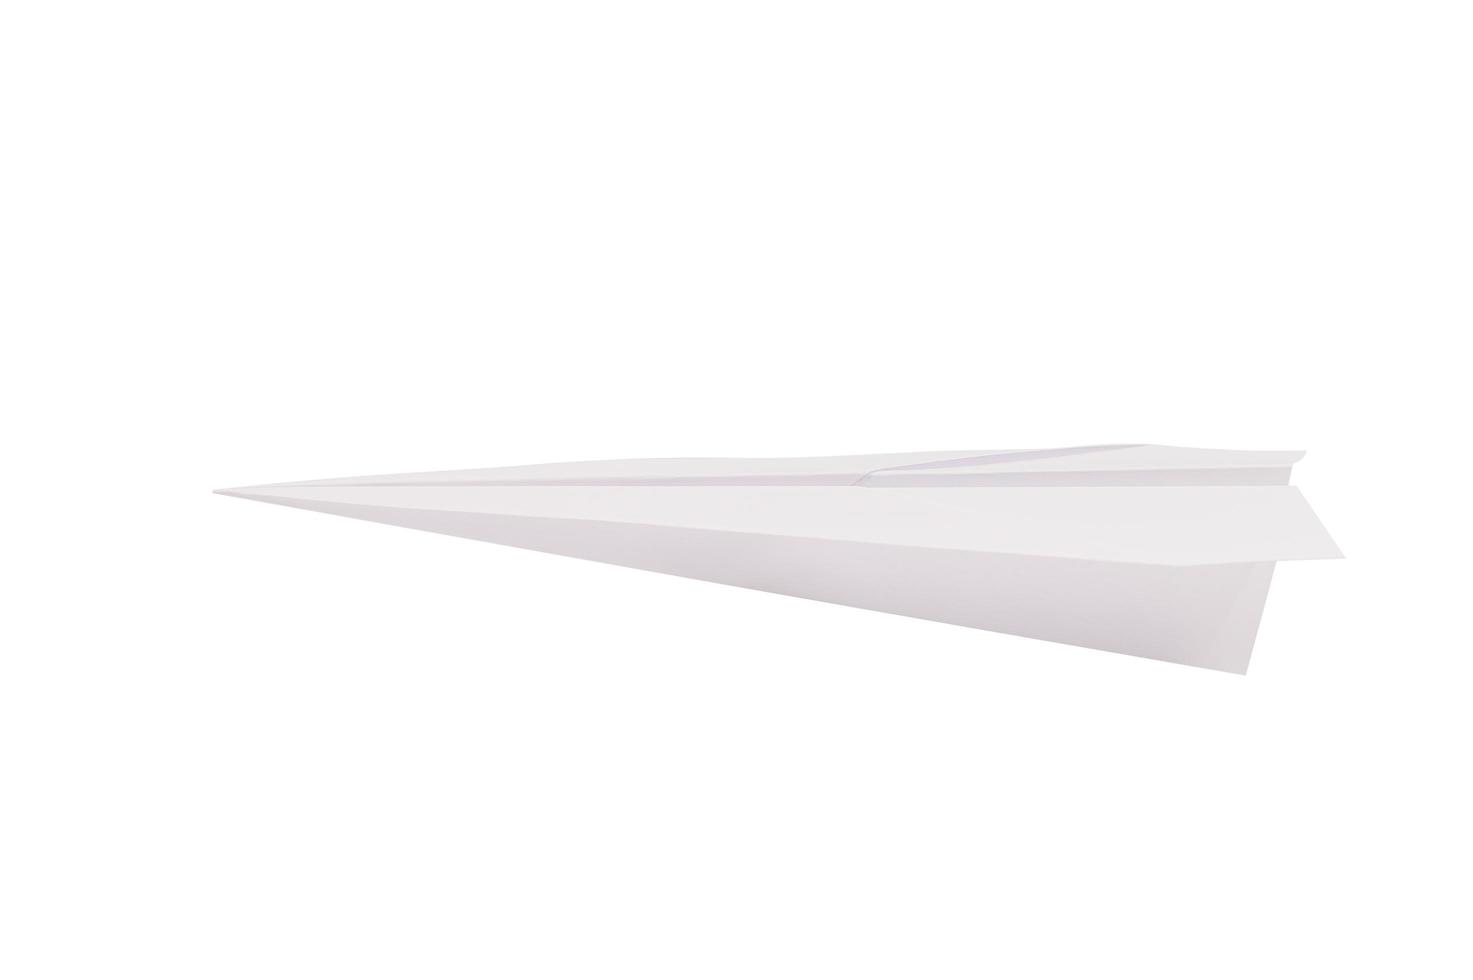 Folding paper plane on white background photo